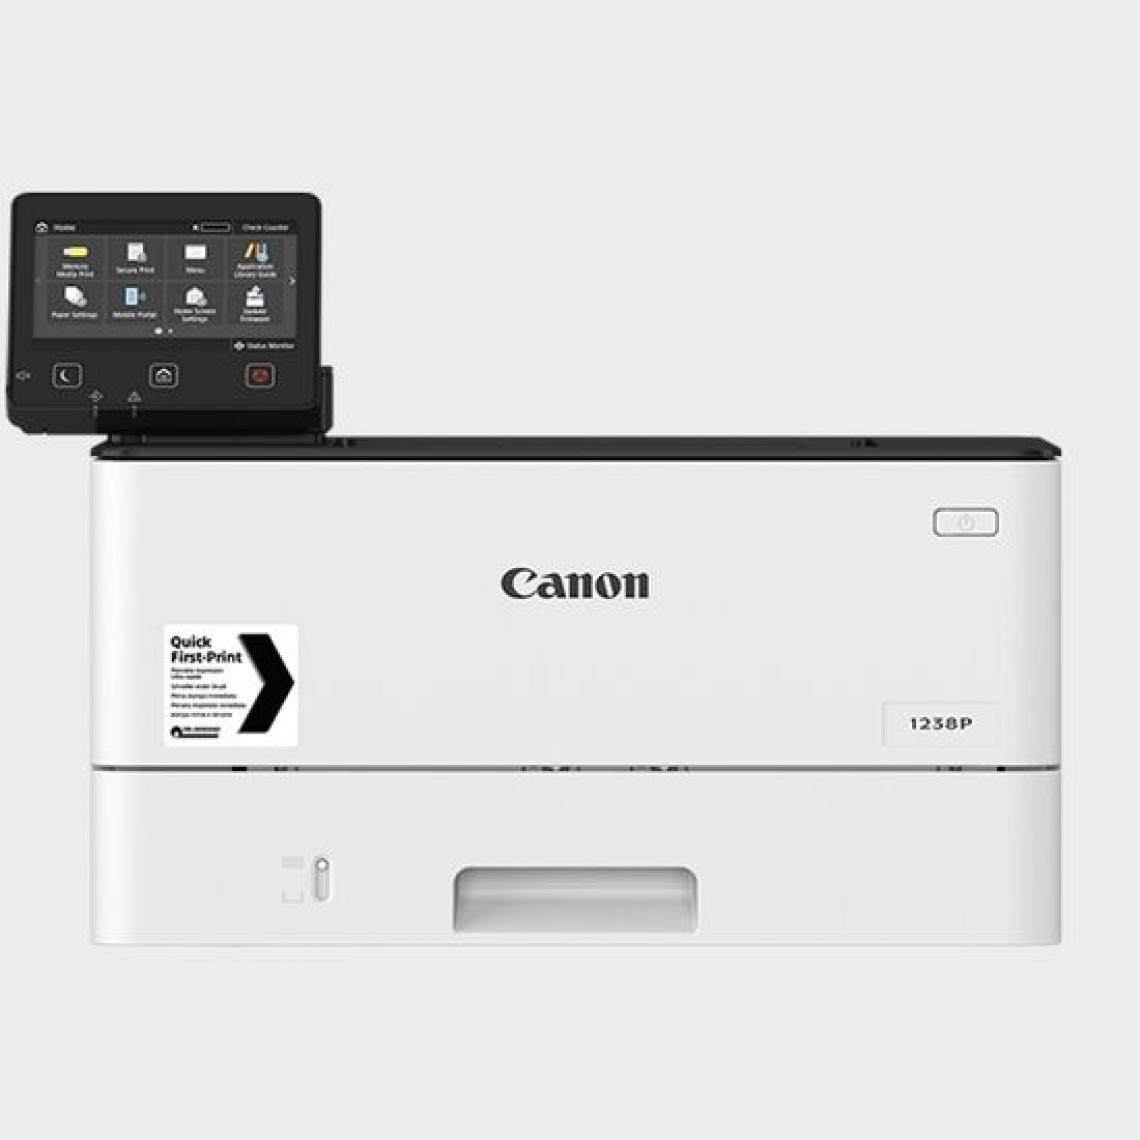 Canon - iSensys X 1238P - Imprimante Laser